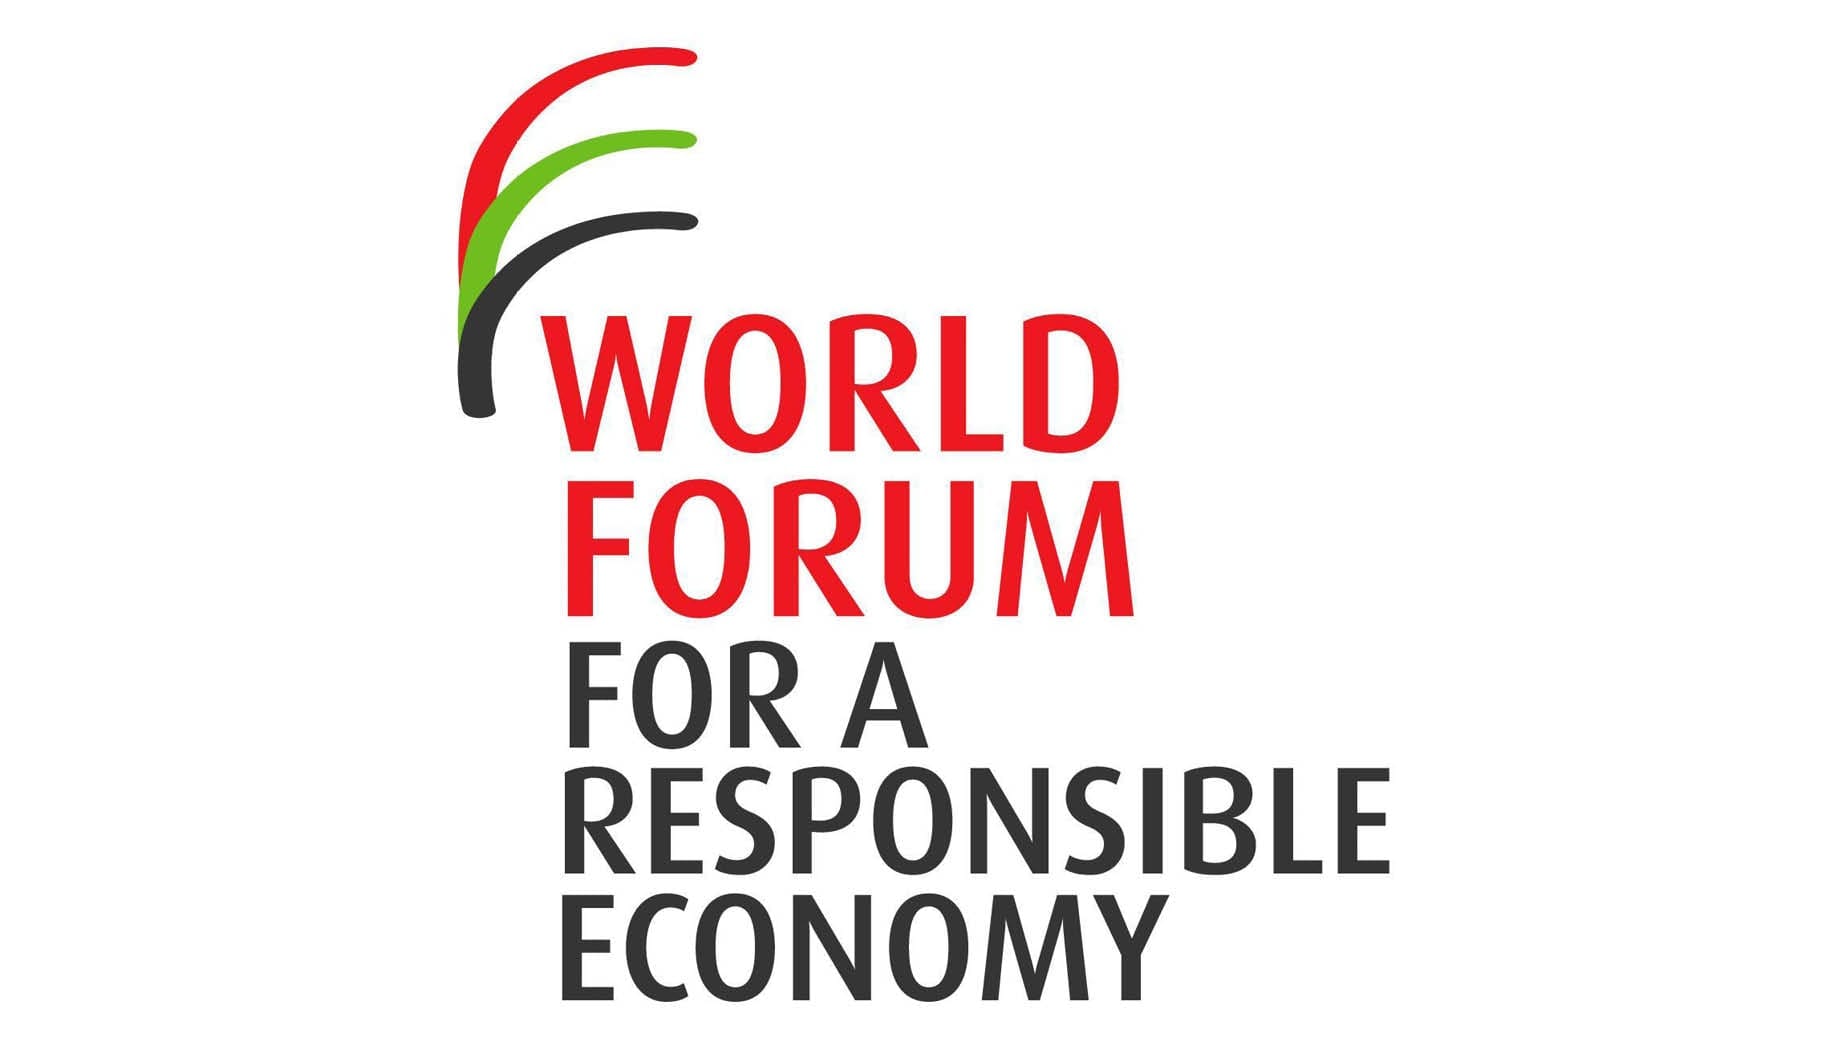 World Forum for a Responsible Economy et ESPOL: un partenariat durable